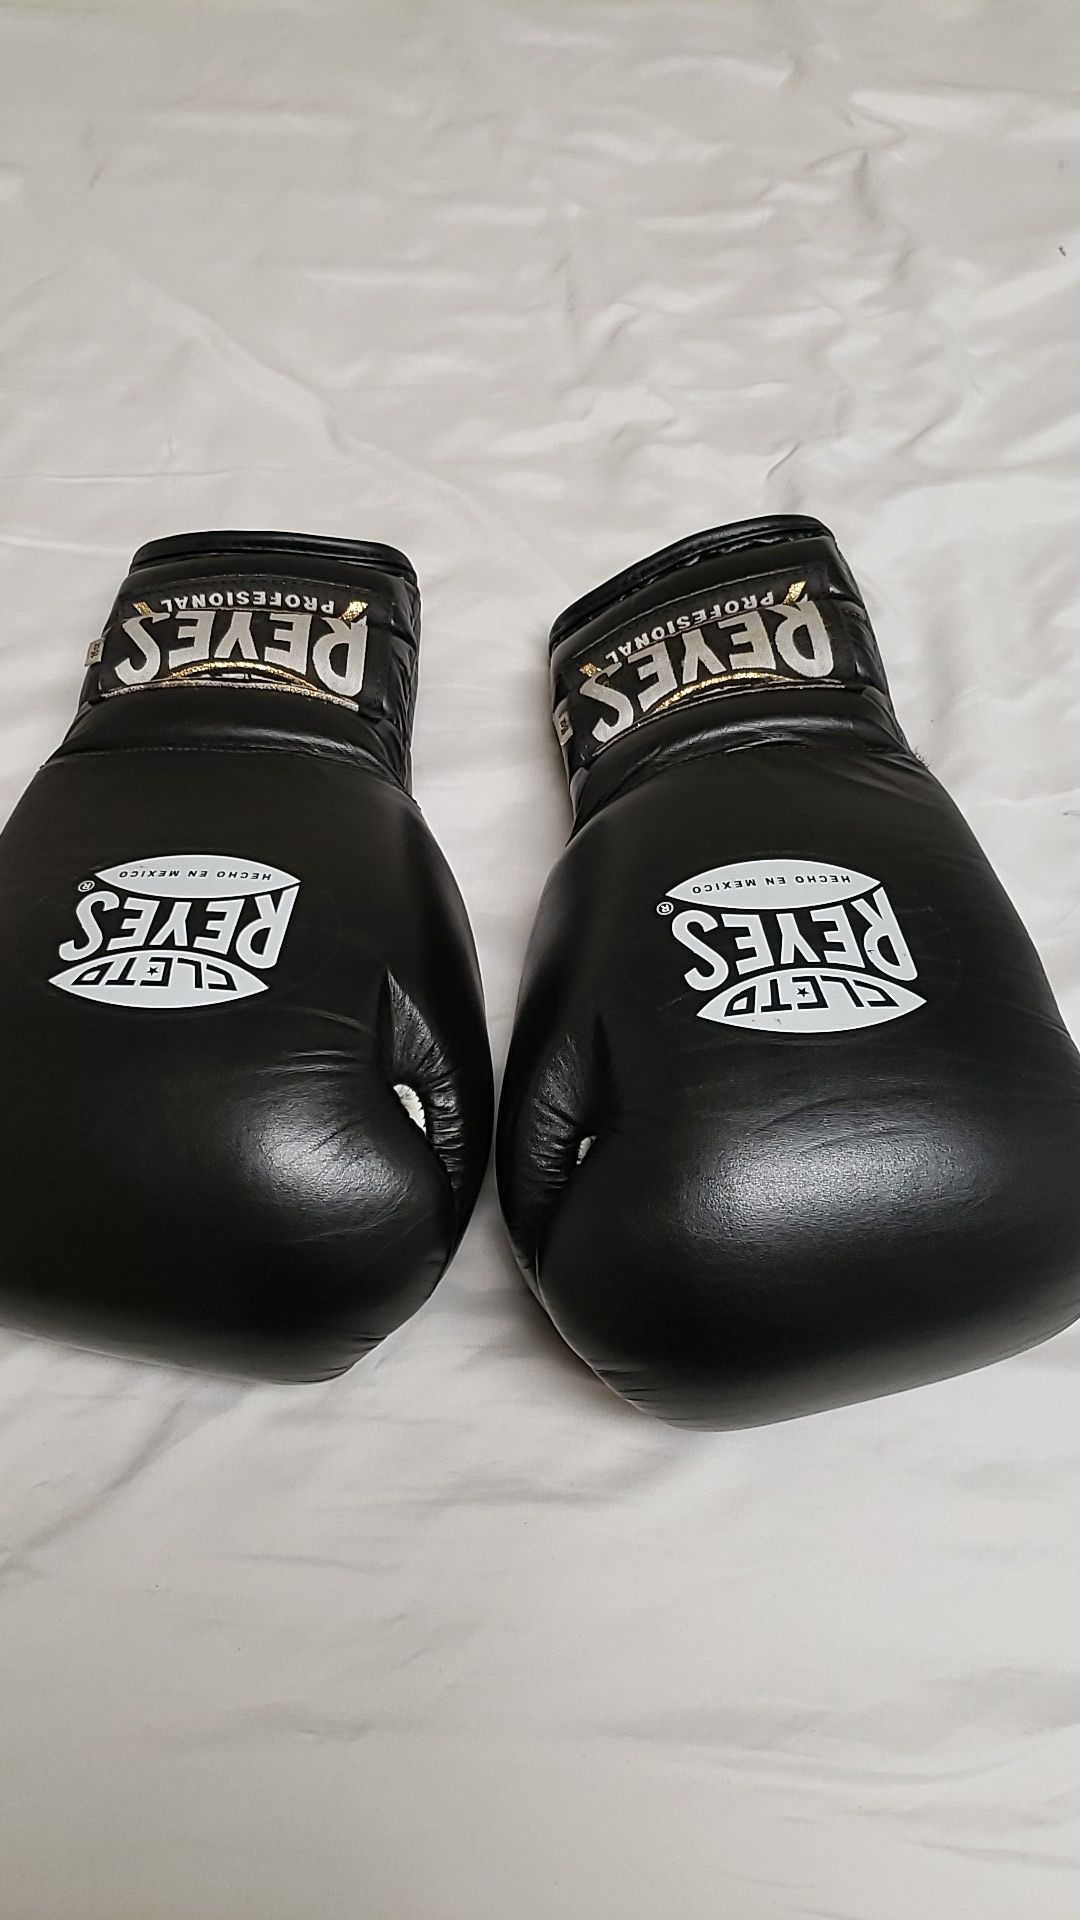 16oz Reyes boxing gloves